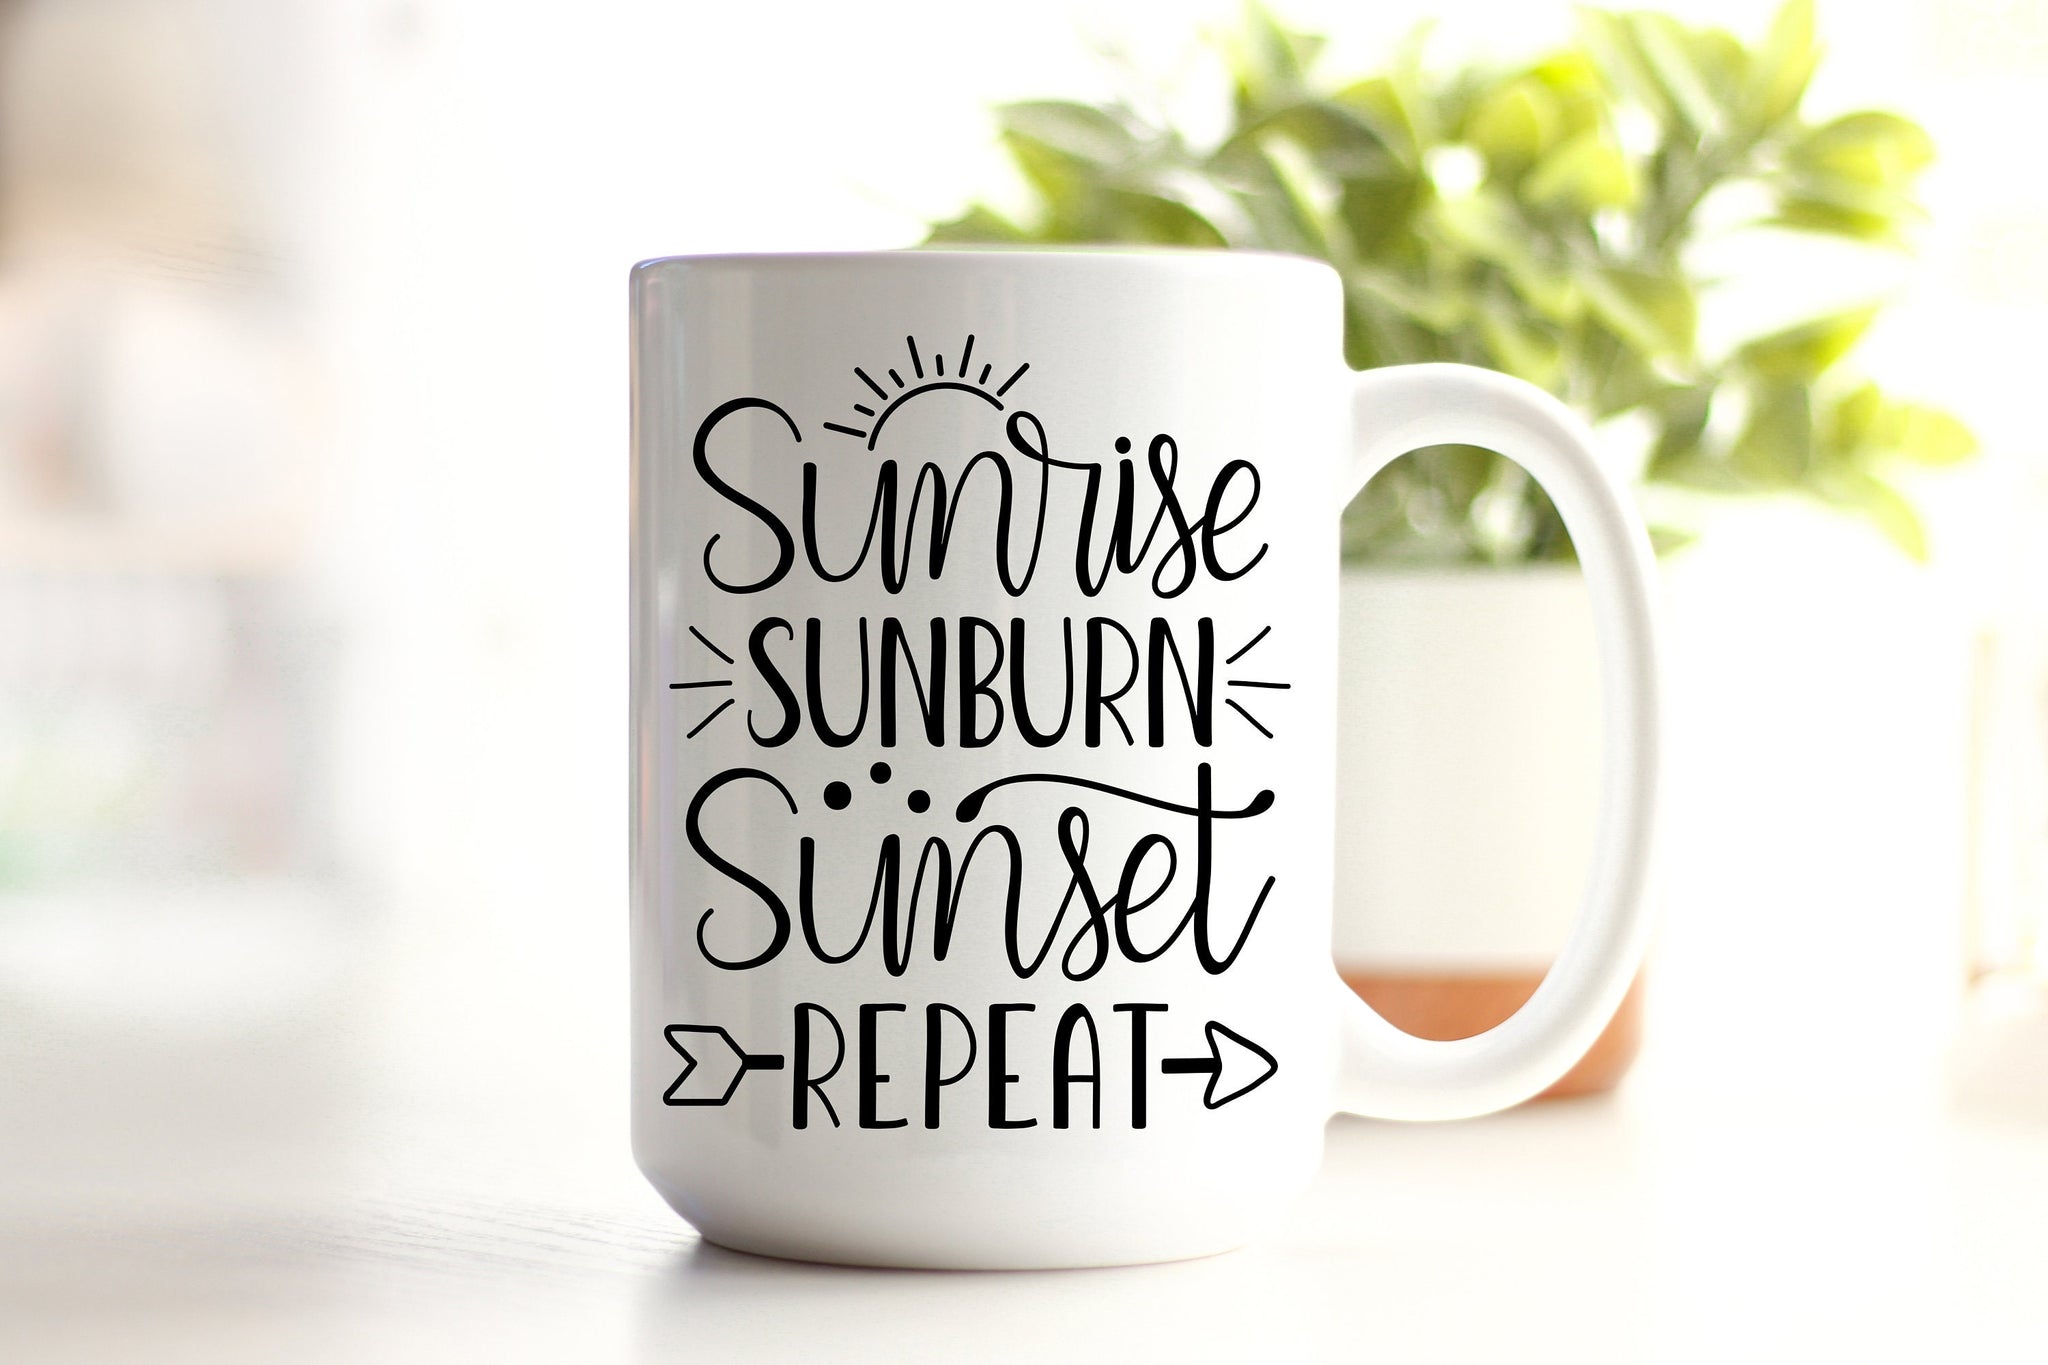 Sunrise Sunburn Sunset Repeat Funny Beach Themed Coffee Mug Gift For Beachy Friend, Funny Beach Coffee Mug Gift For Her Mom